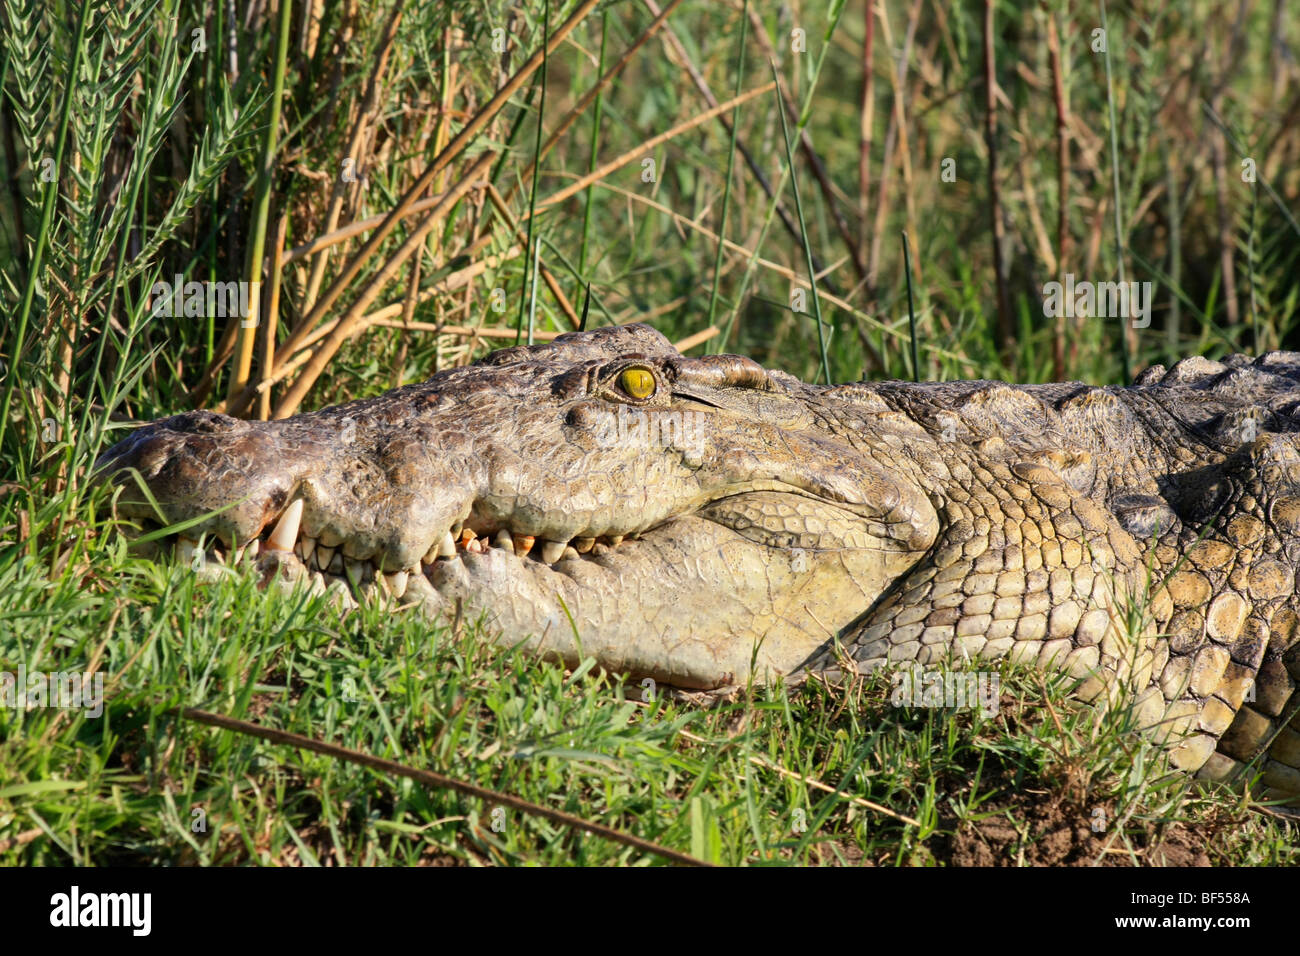 A Nile Crocodile lying on the banks of the Zambezi River in Zambia Stock Photo